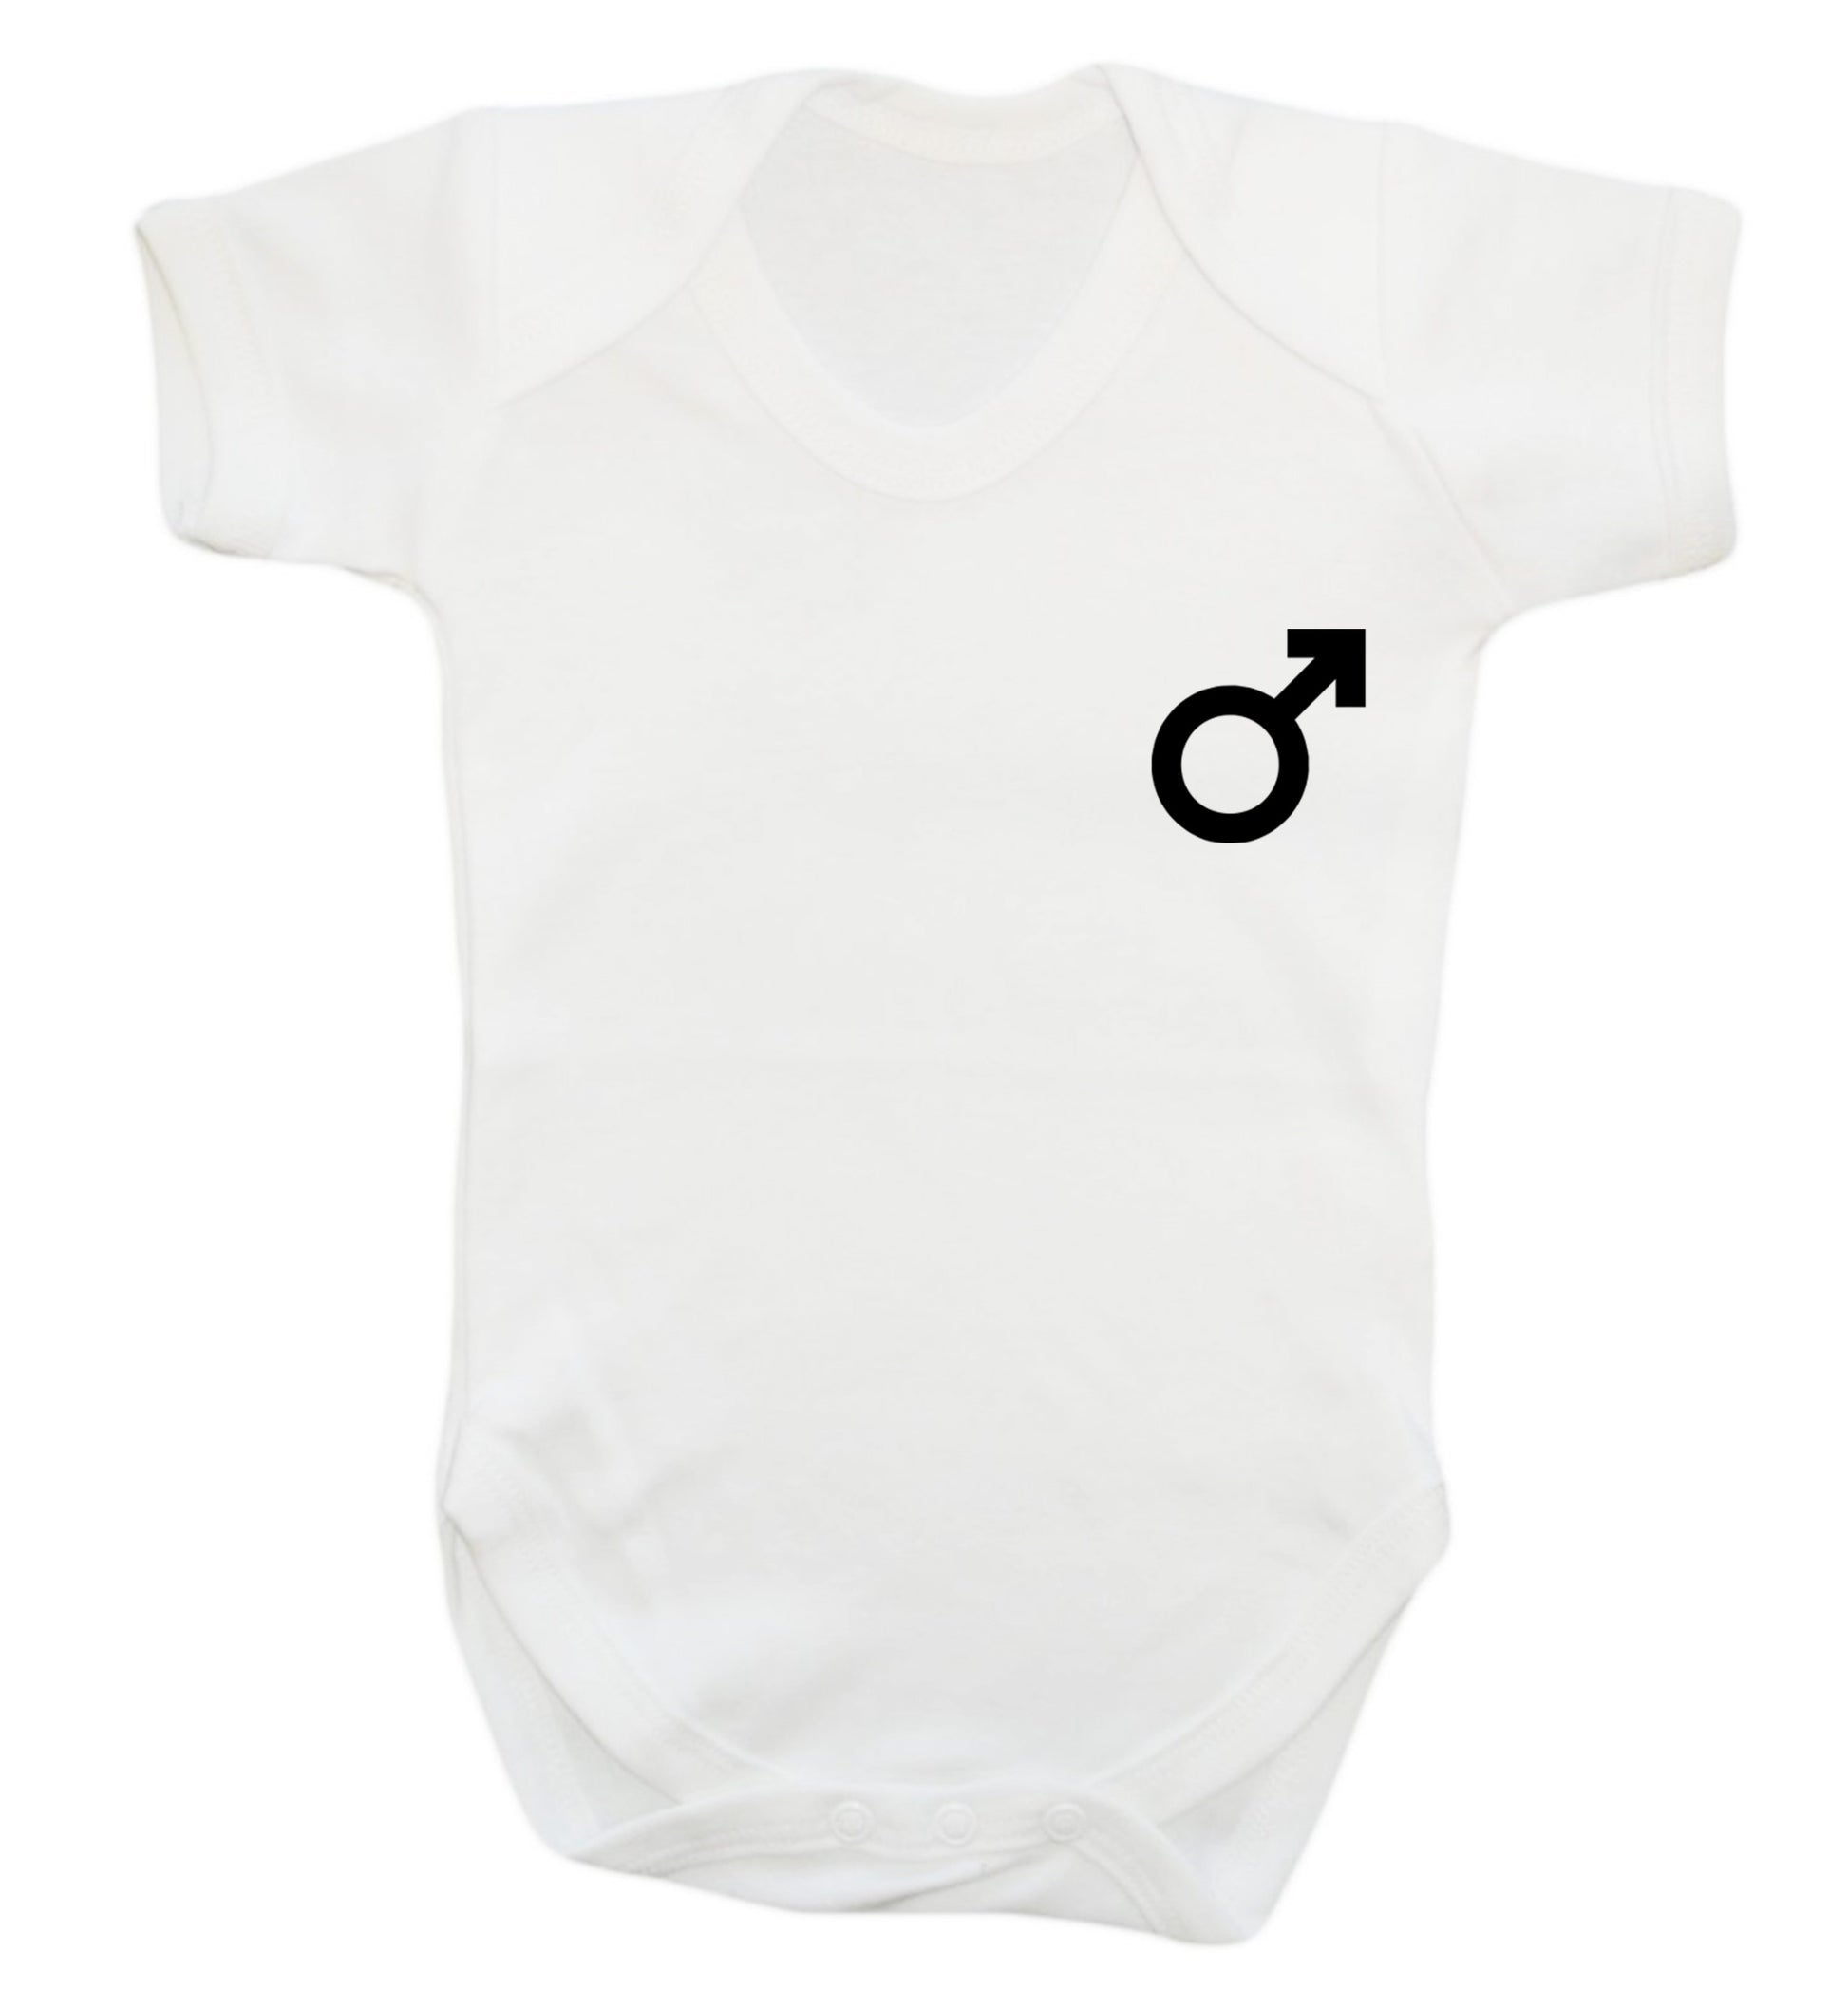 Male symbol pocket Baby Vest white 18-24 months